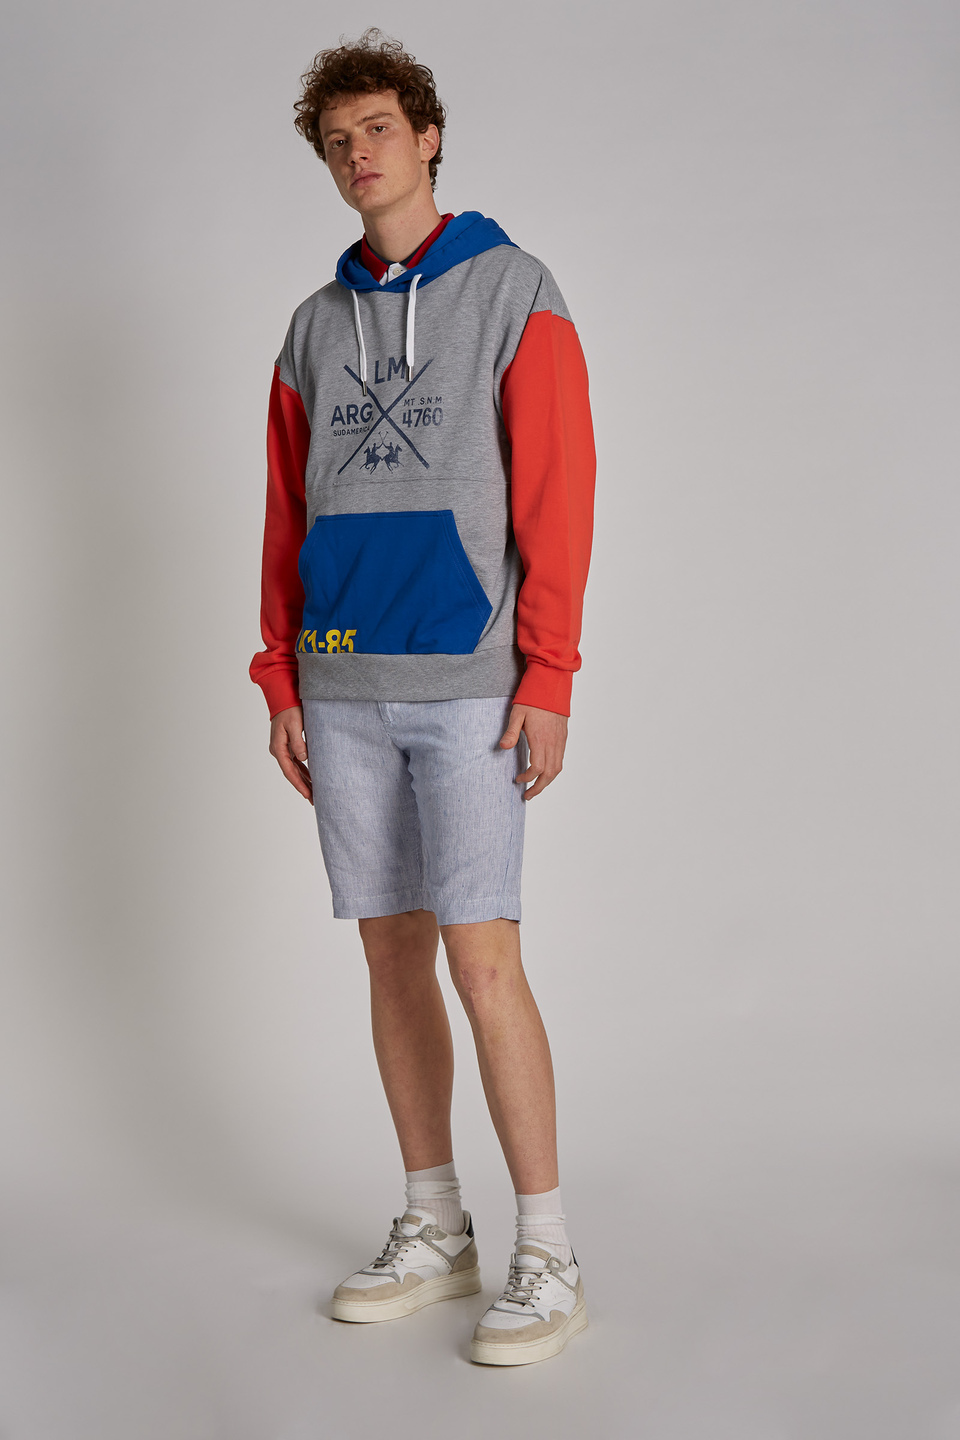 Herren-Sweatshirt aus Baumwollmix mit Reißverschluss, oversized Modell - La Martina - Official Online Shop